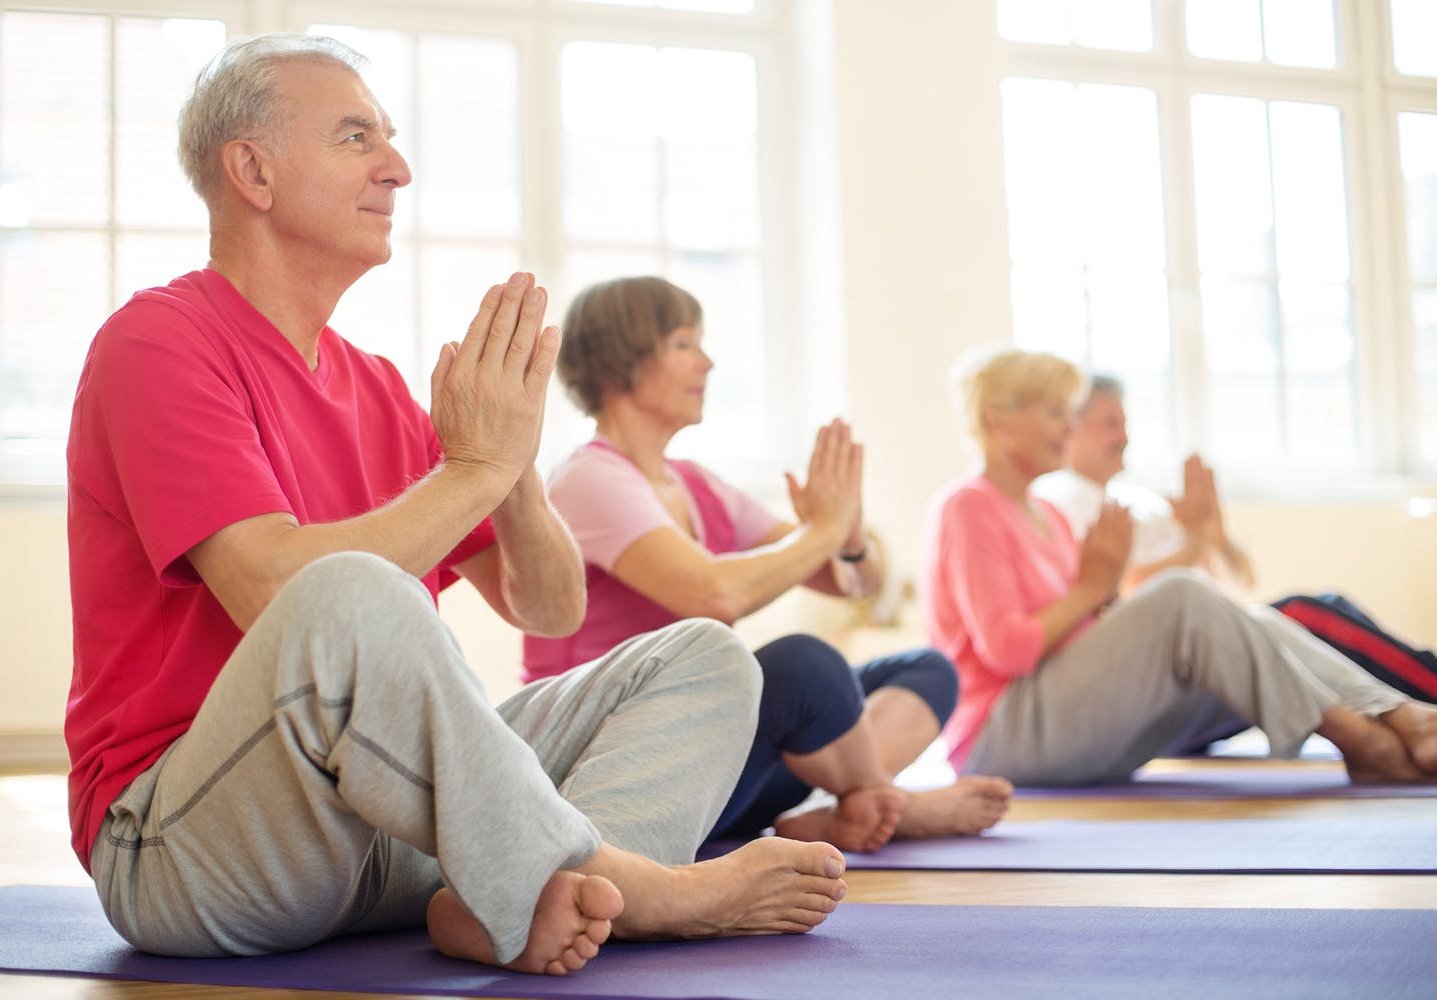 Seniors Yoga Google image from https://www.yogaclassnearyou.co.uk/yoga-classes-for-over-50s